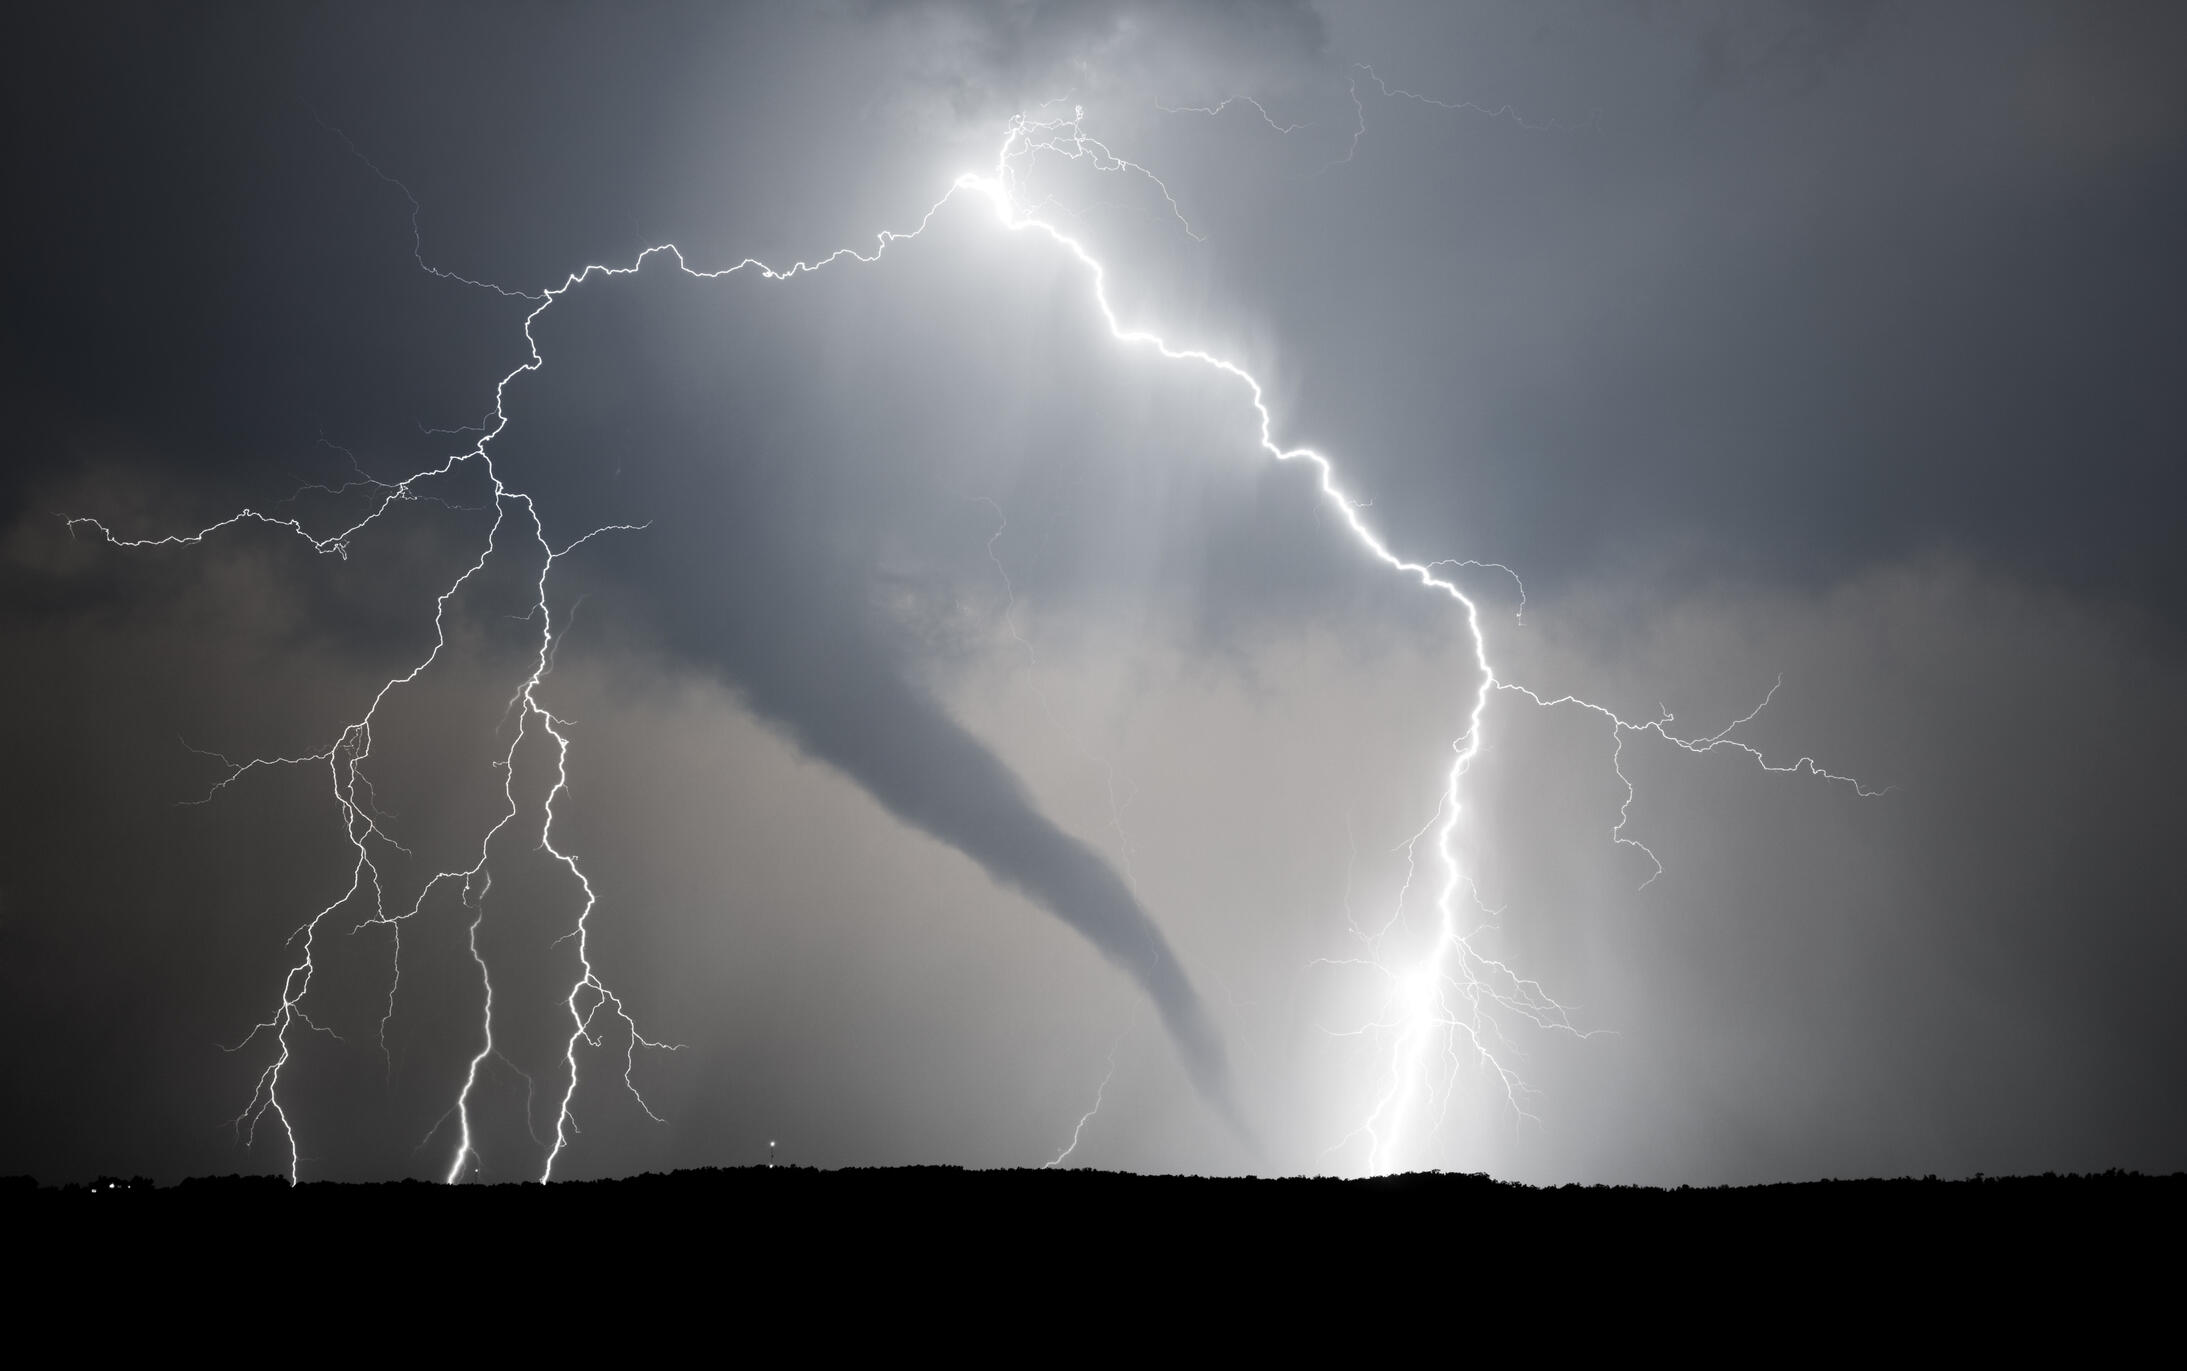 Washington Parish Hit By Two EF-2 Tornadoes - Thumbnail Image